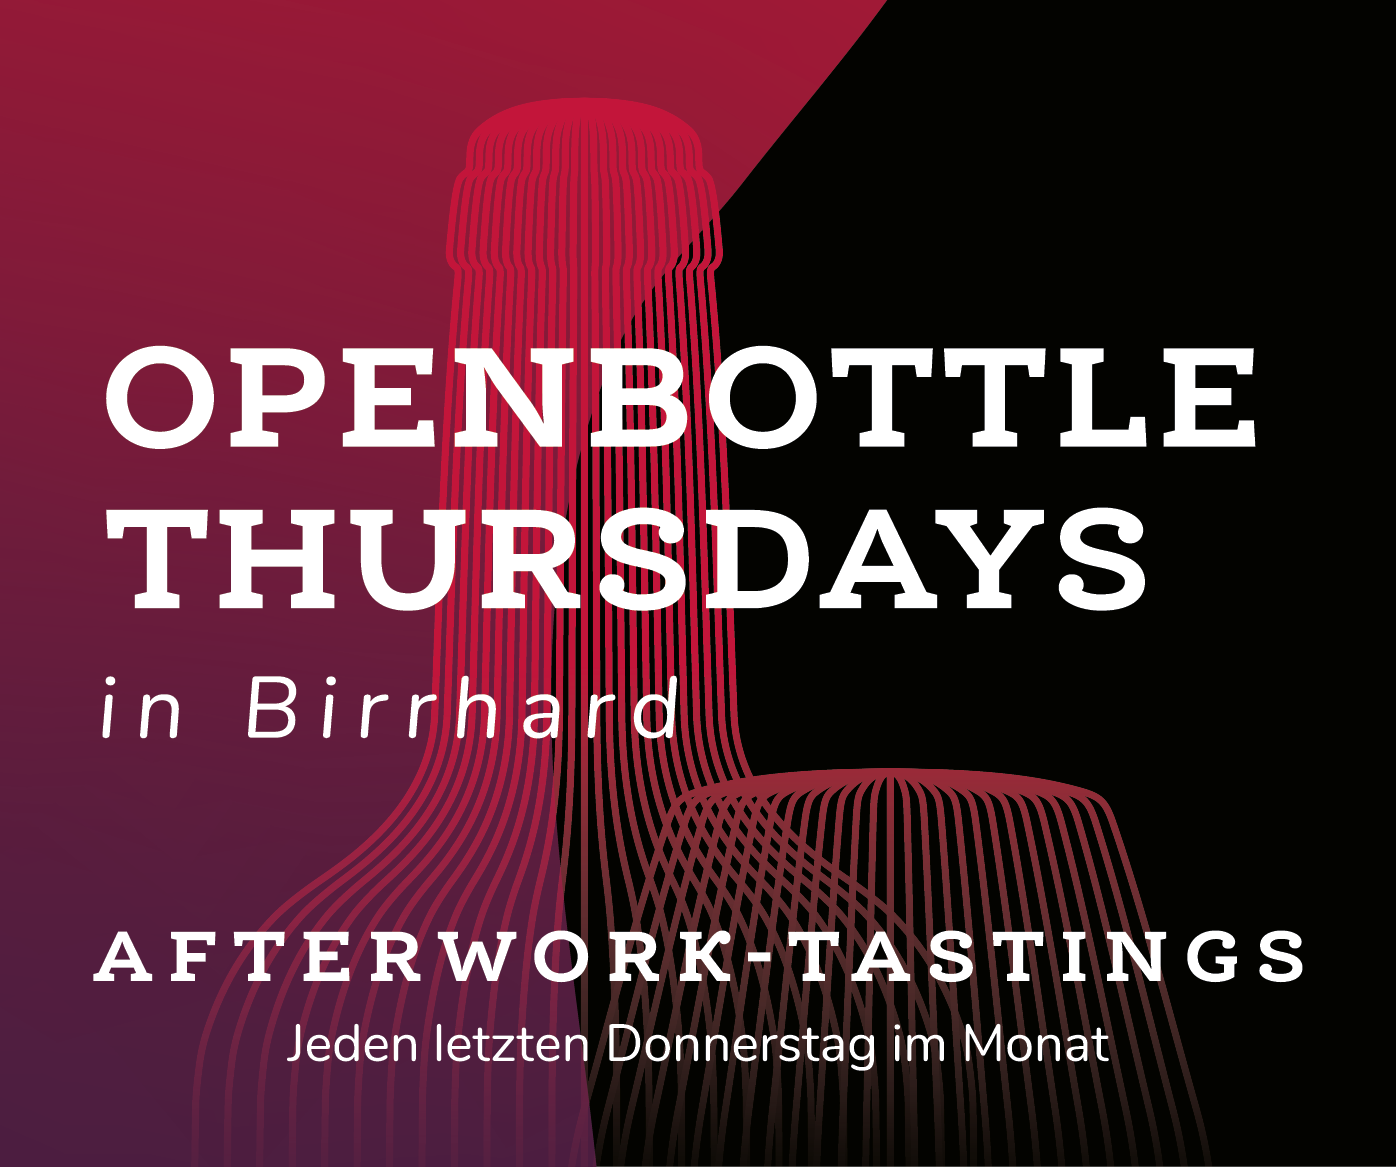 Openbottle Thursdays Birrhard